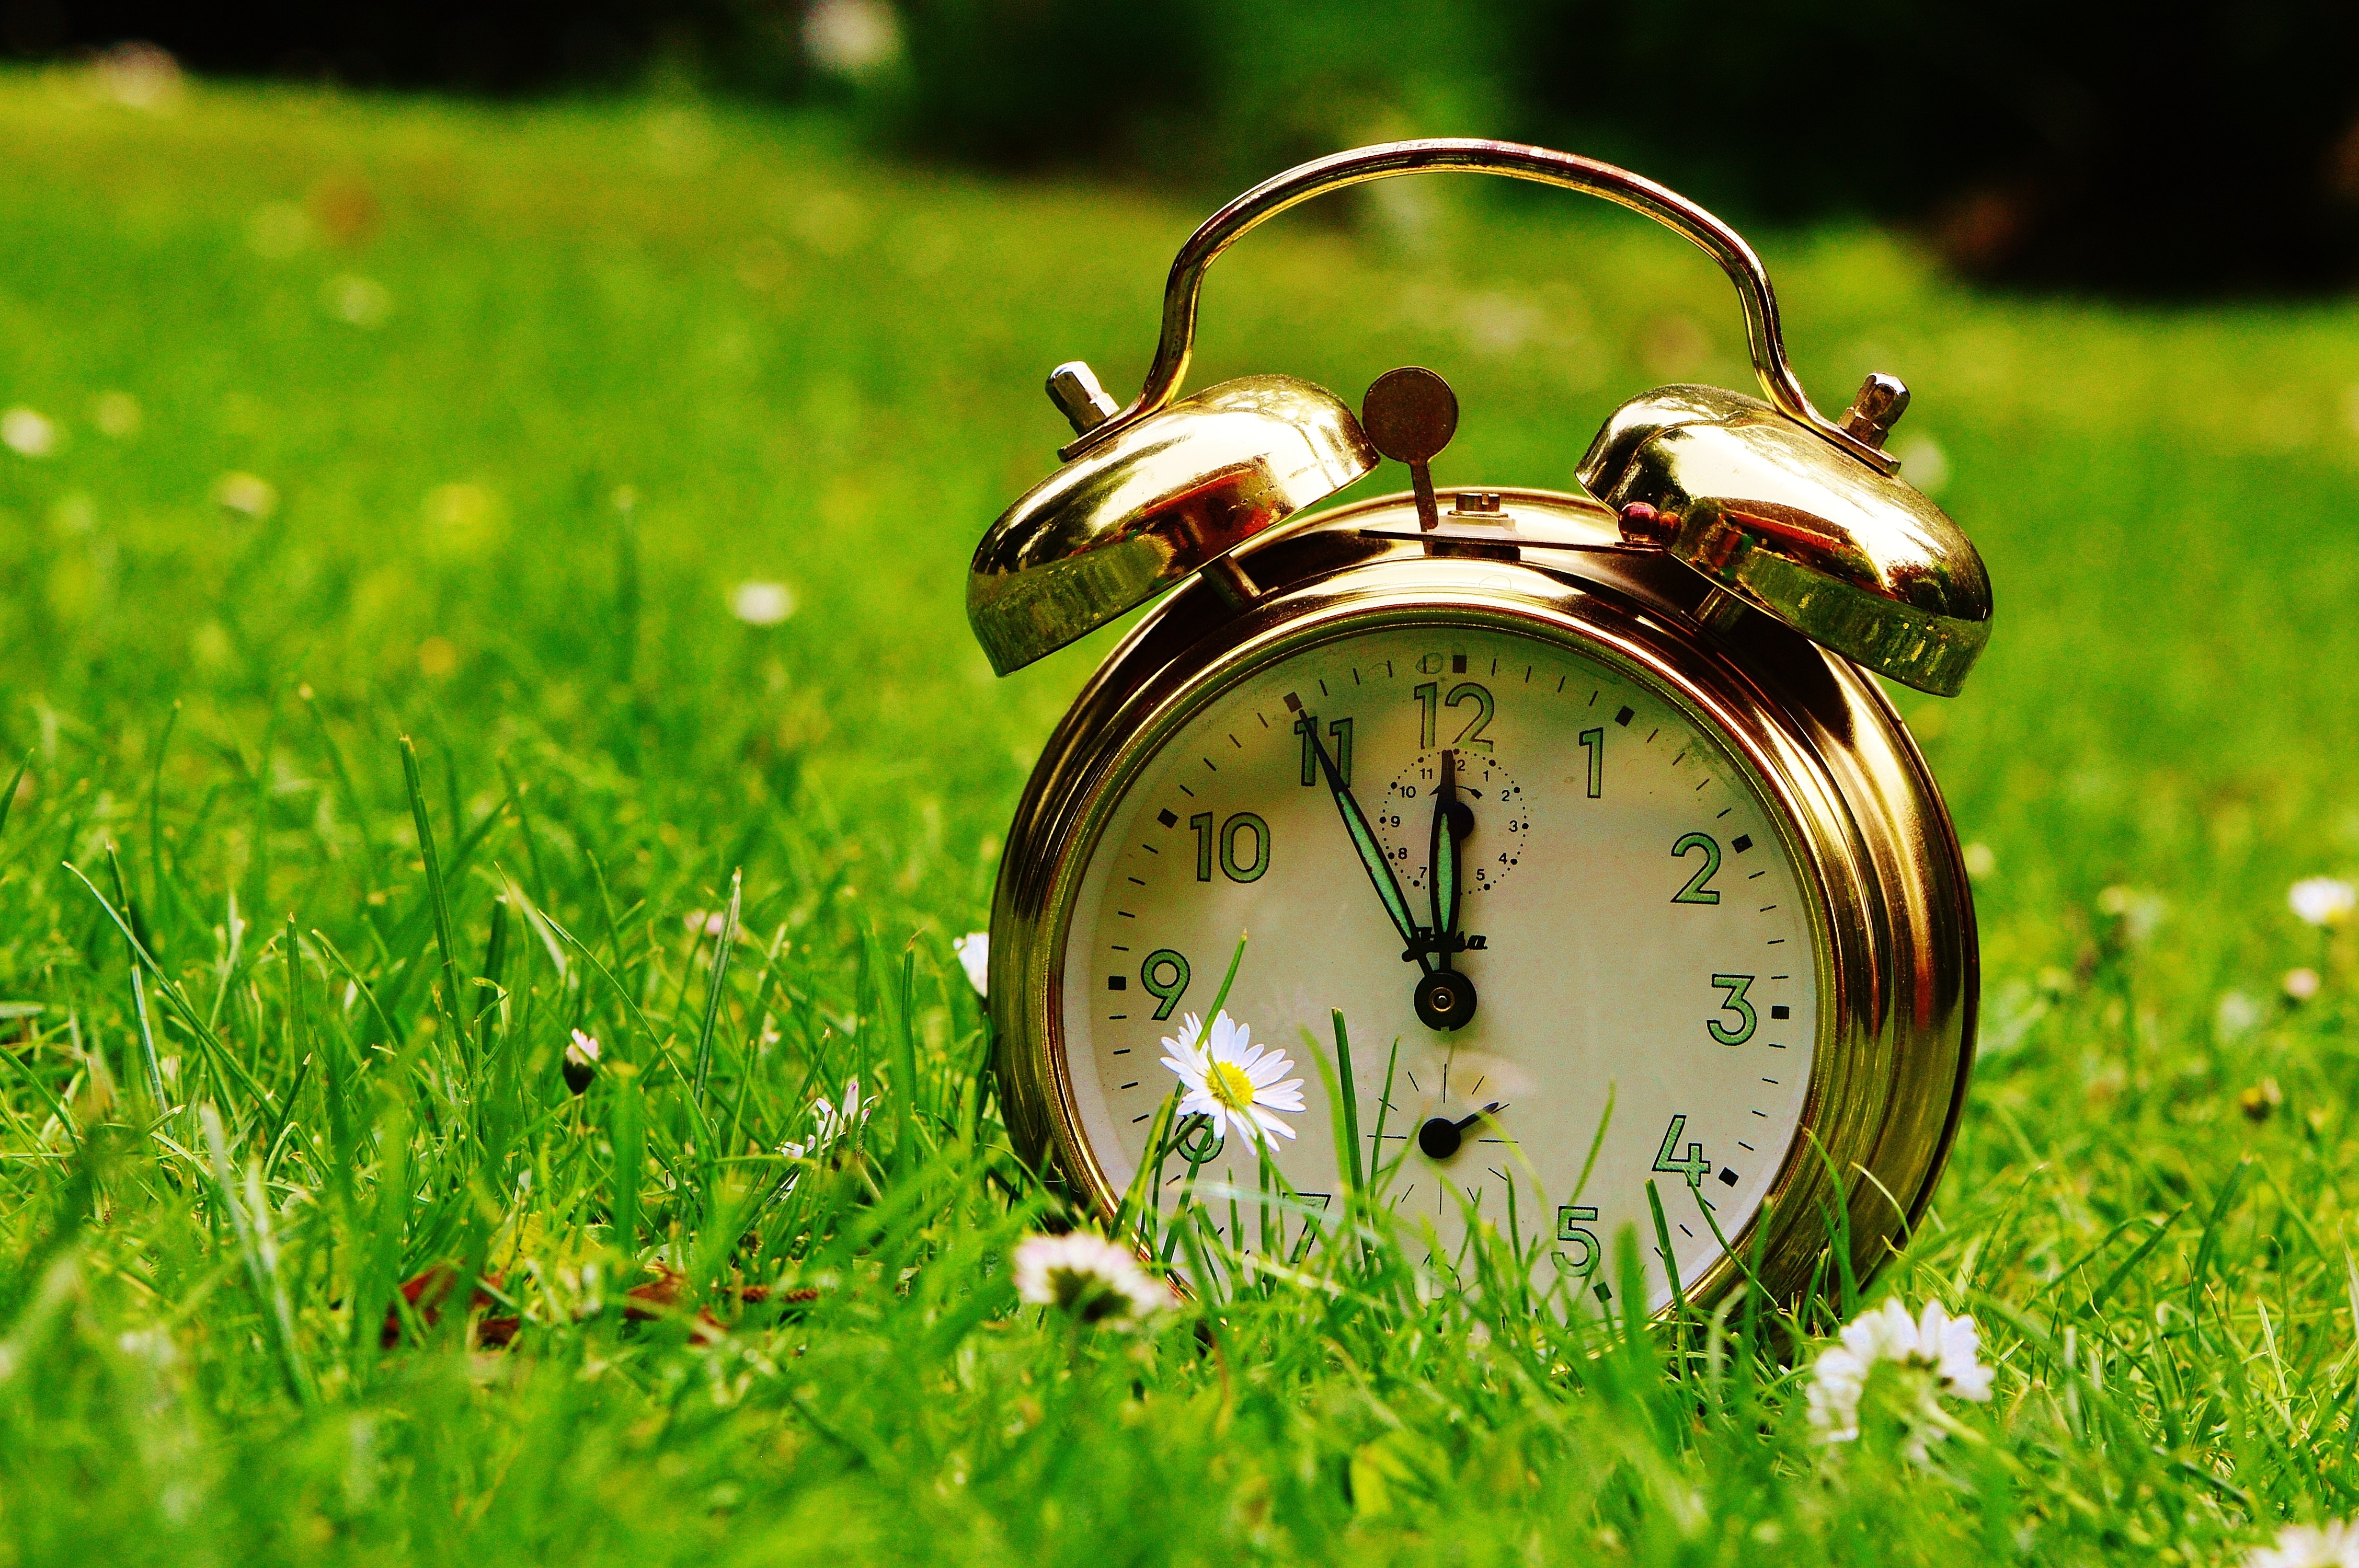 tilt shift lens photography of gold alarm clock on green grass field